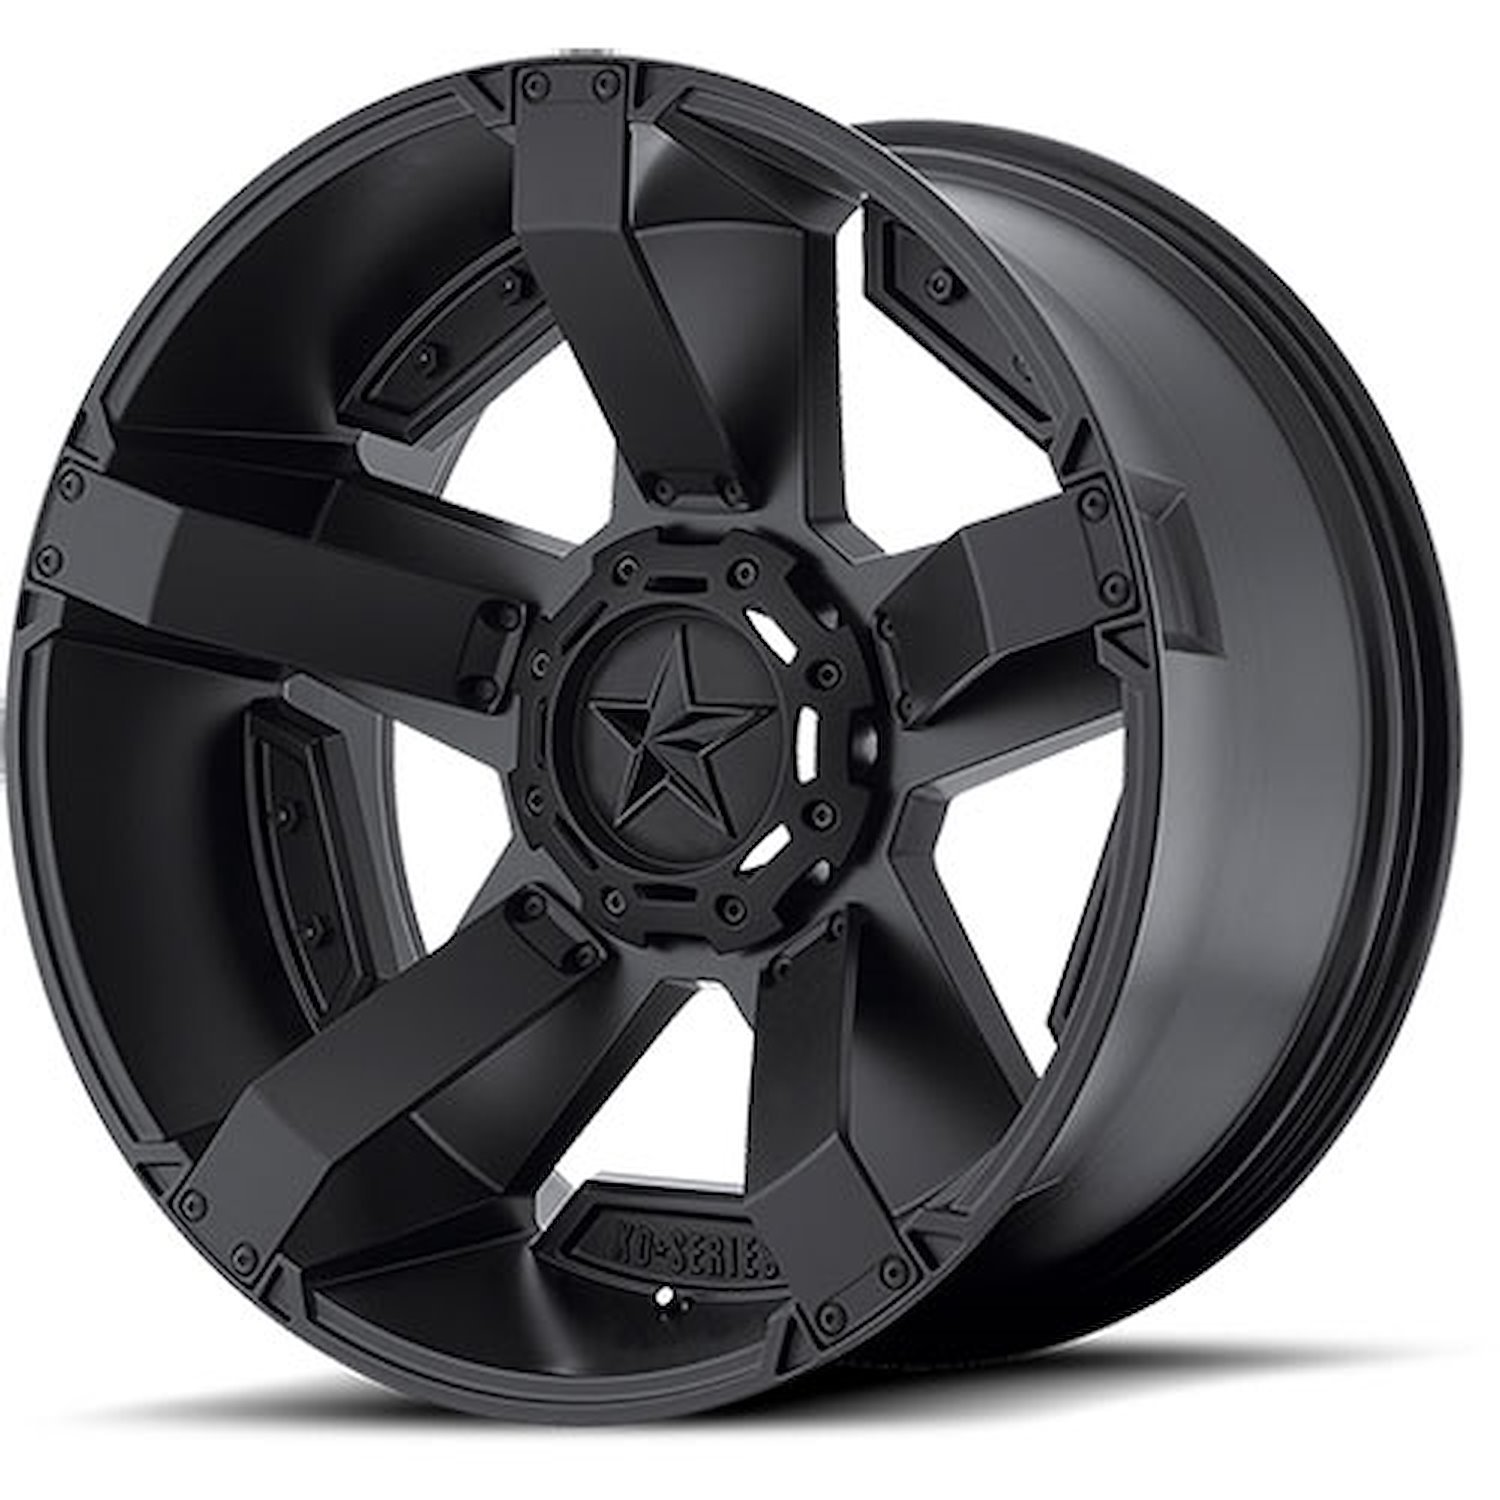 XD811 Series RS2 Rockstar Wheel Size: 20" x 9"